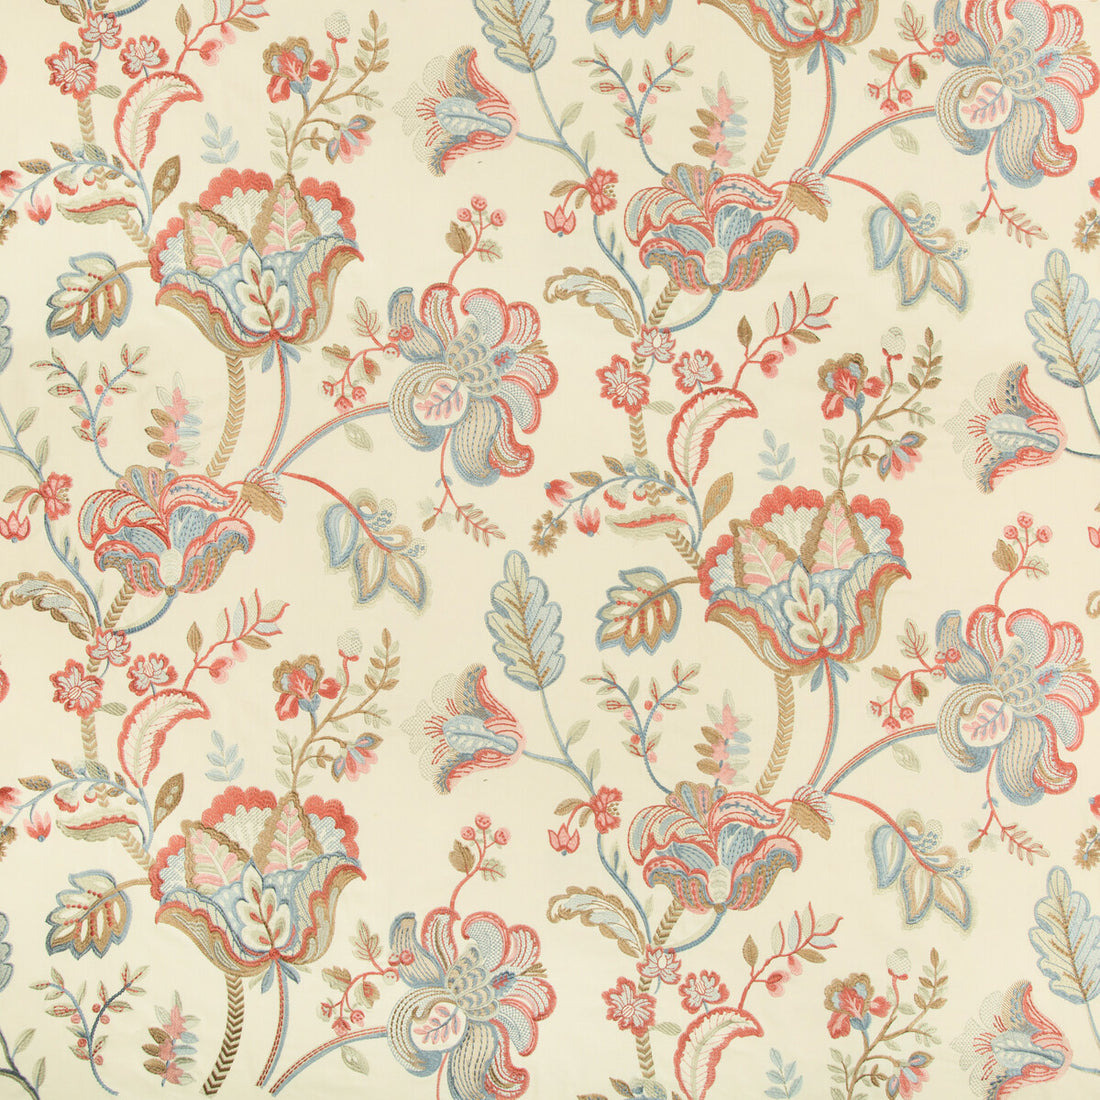 Bradford Emb fabric in petal/capri color - pattern 2017174.57.0 - by Lee Jofa in the Westport collection